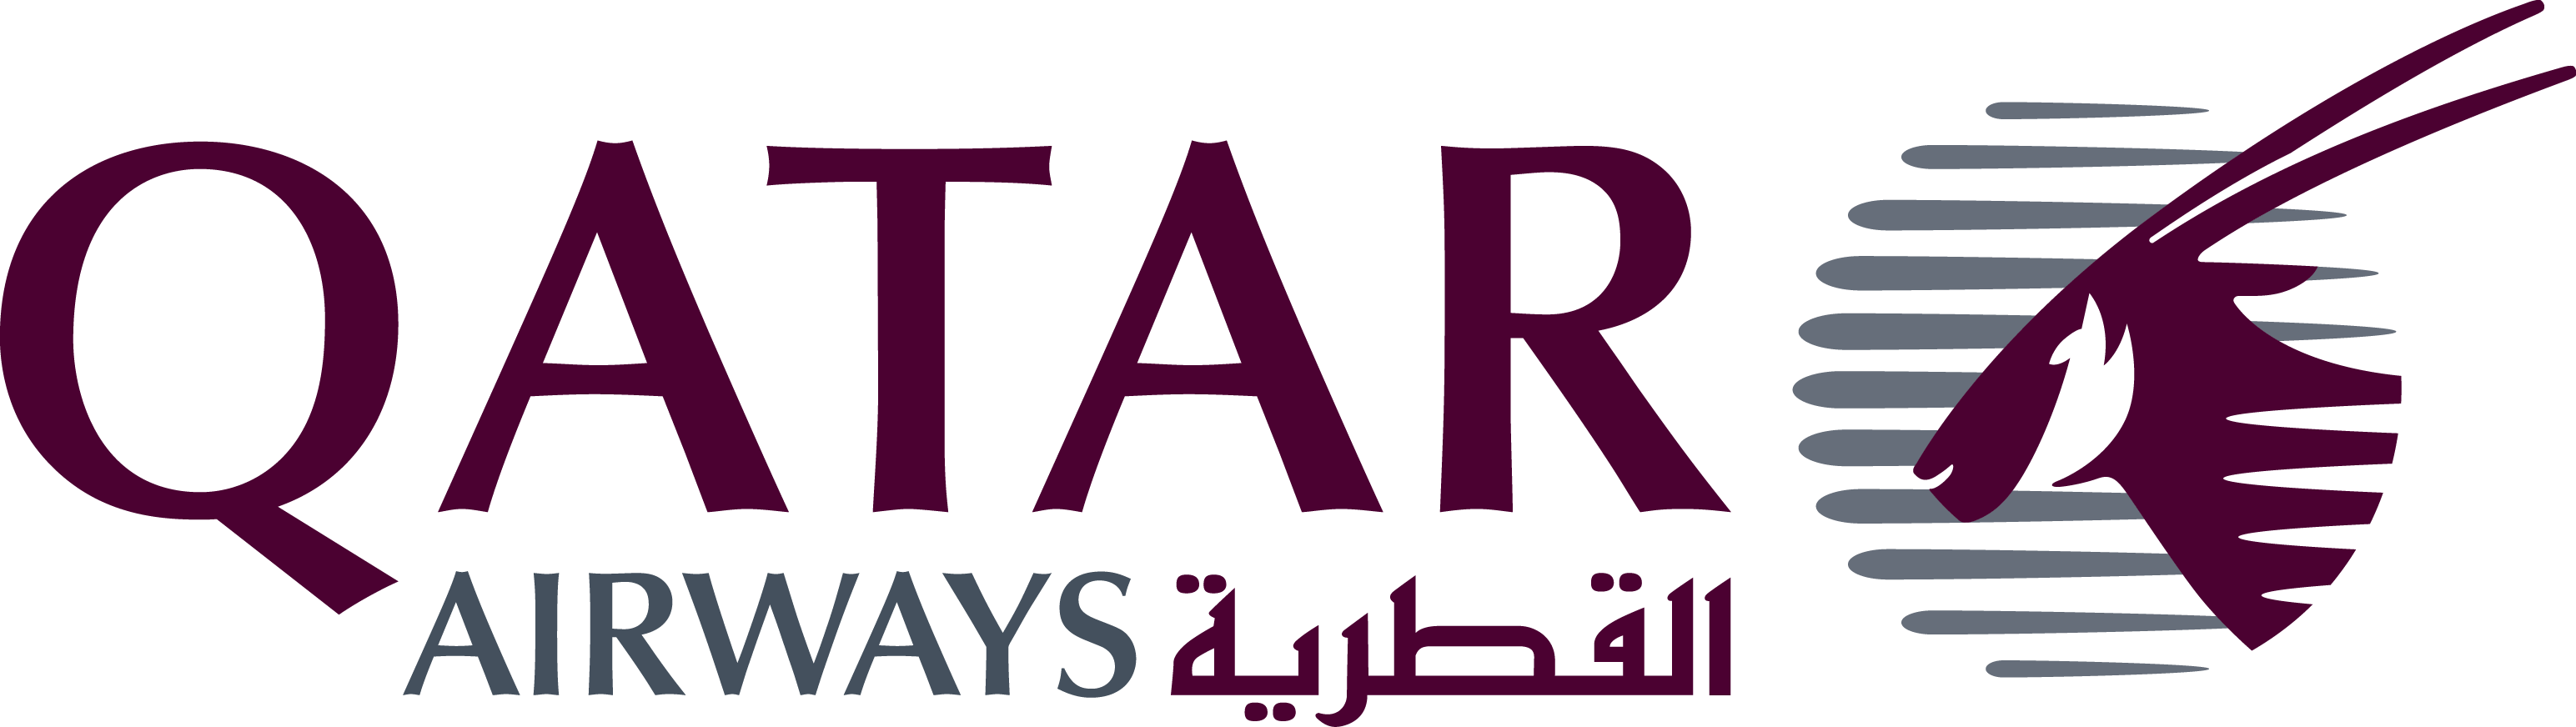 qatar airline